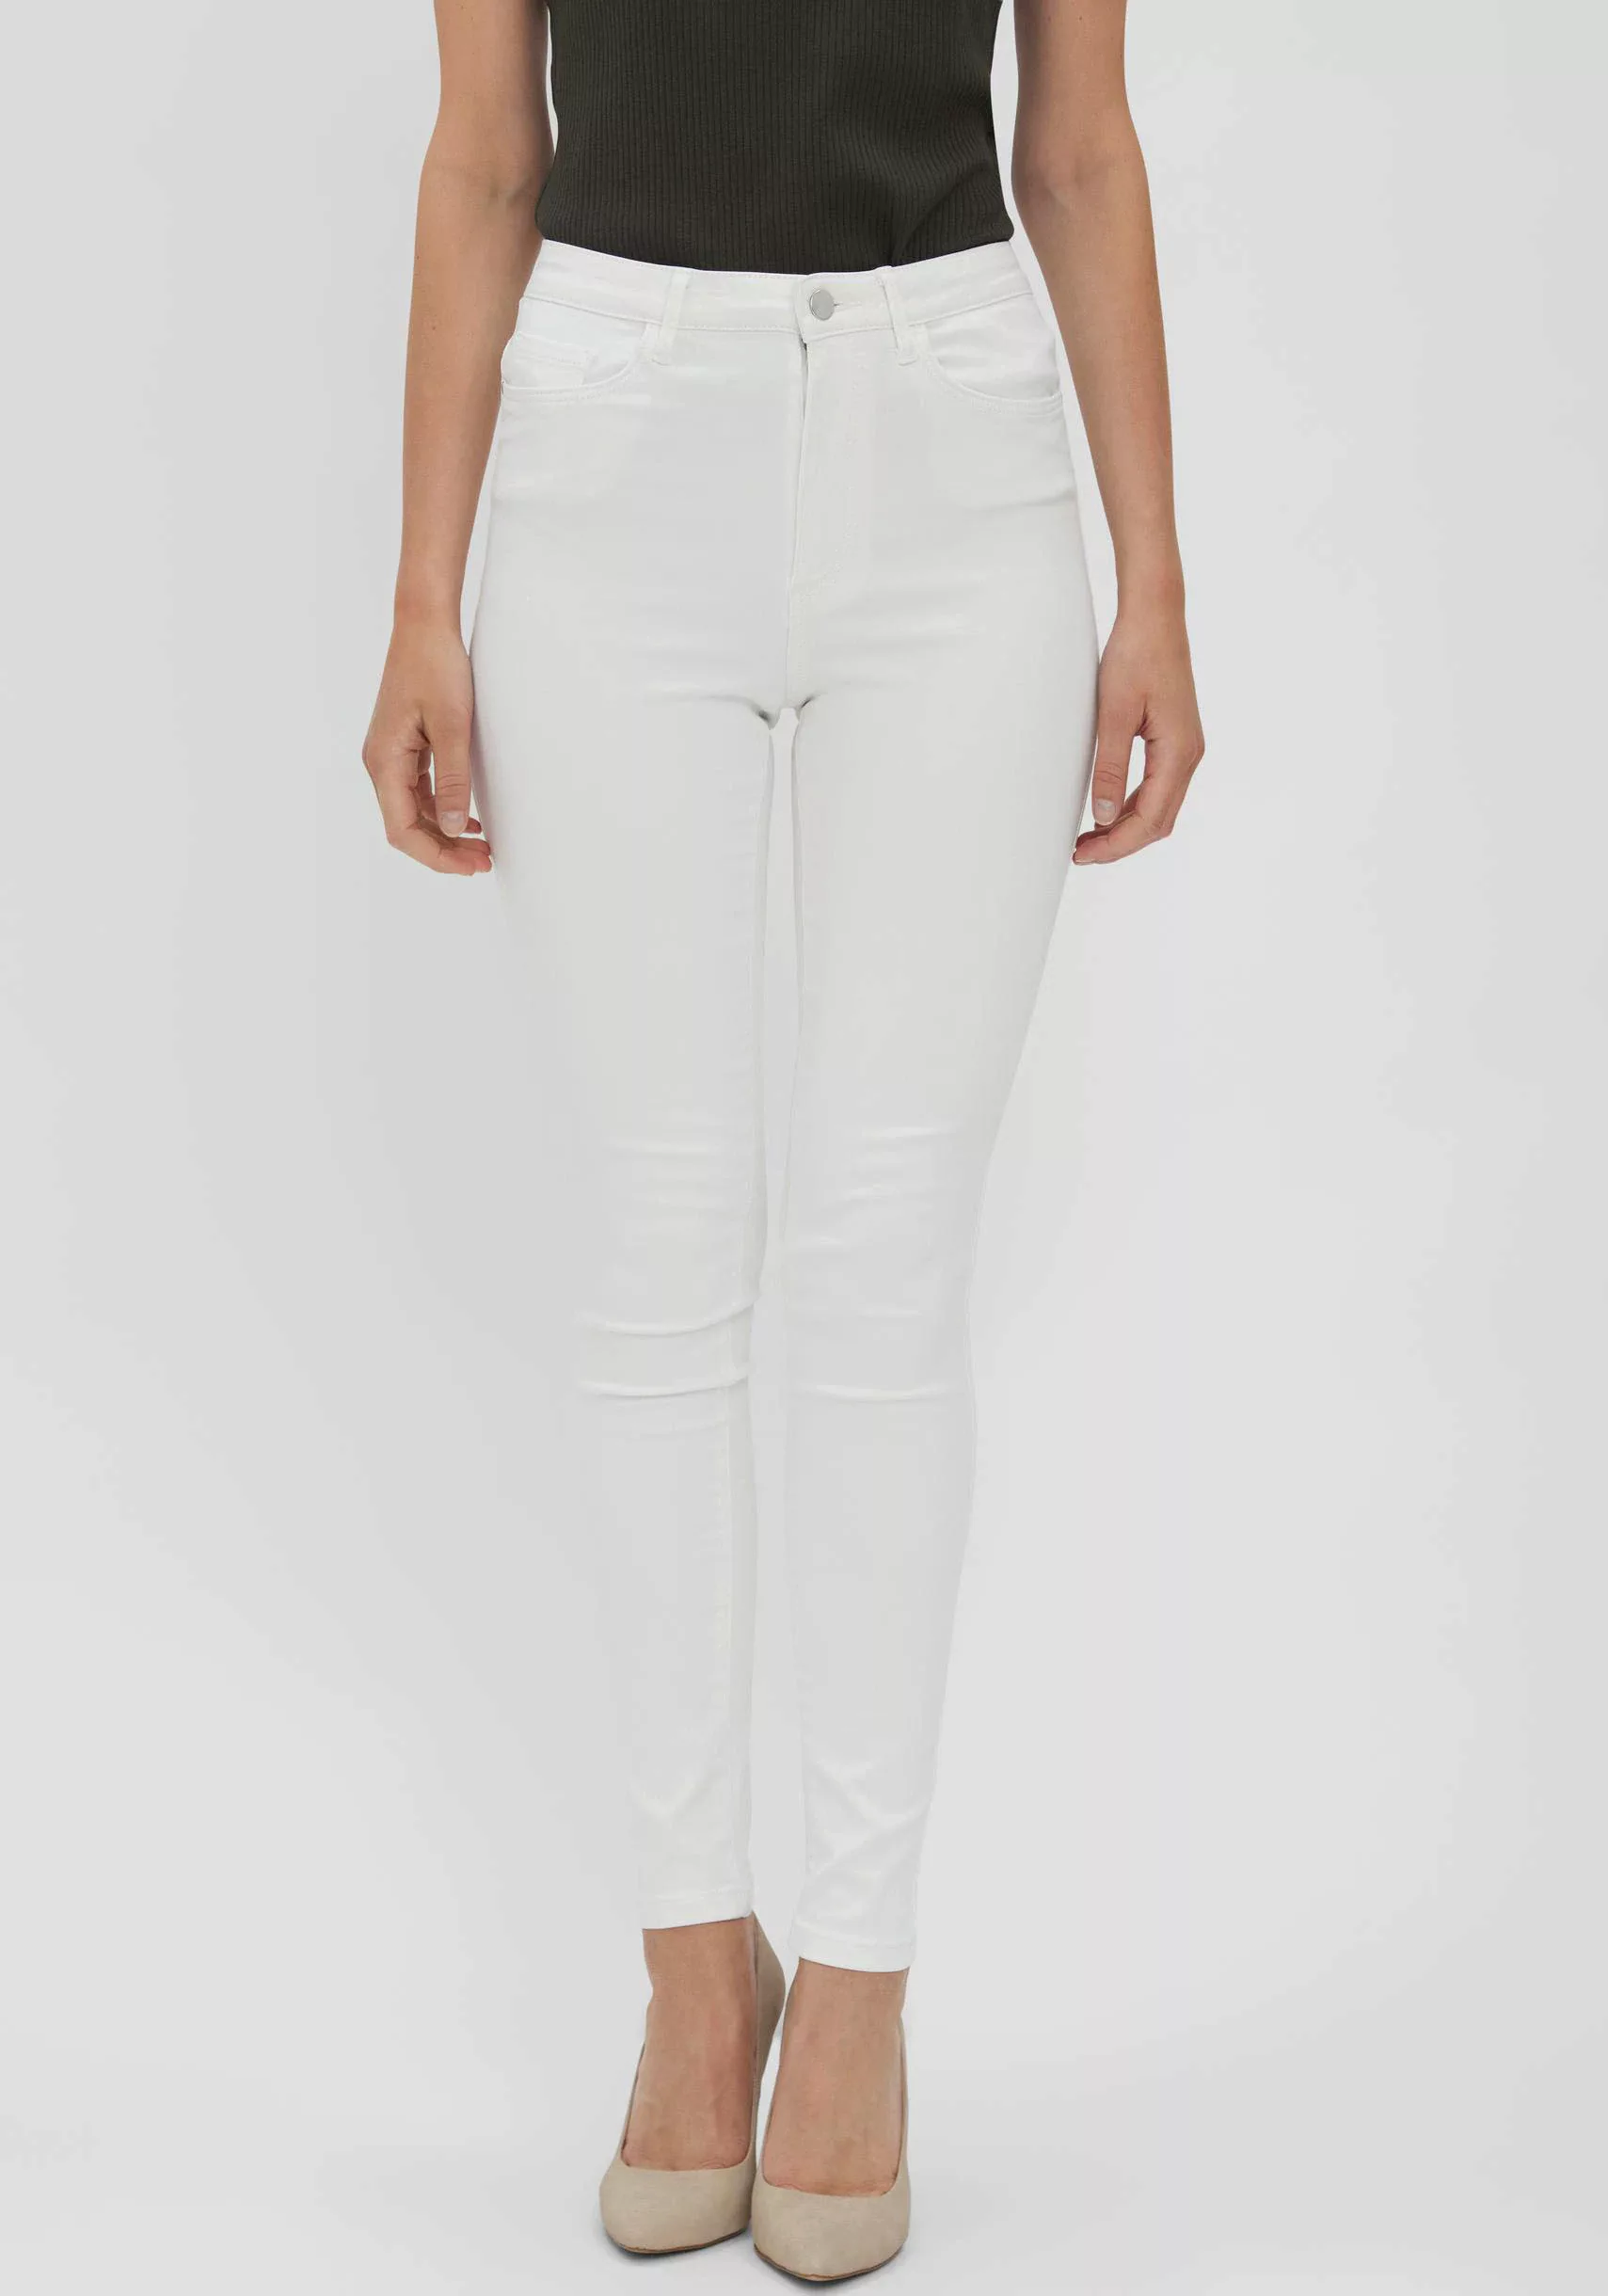 Vero Moda Damen Jeans VMSOPHIA VI403- Skinny Fit - Weiss - Bright White günstig online kaufen